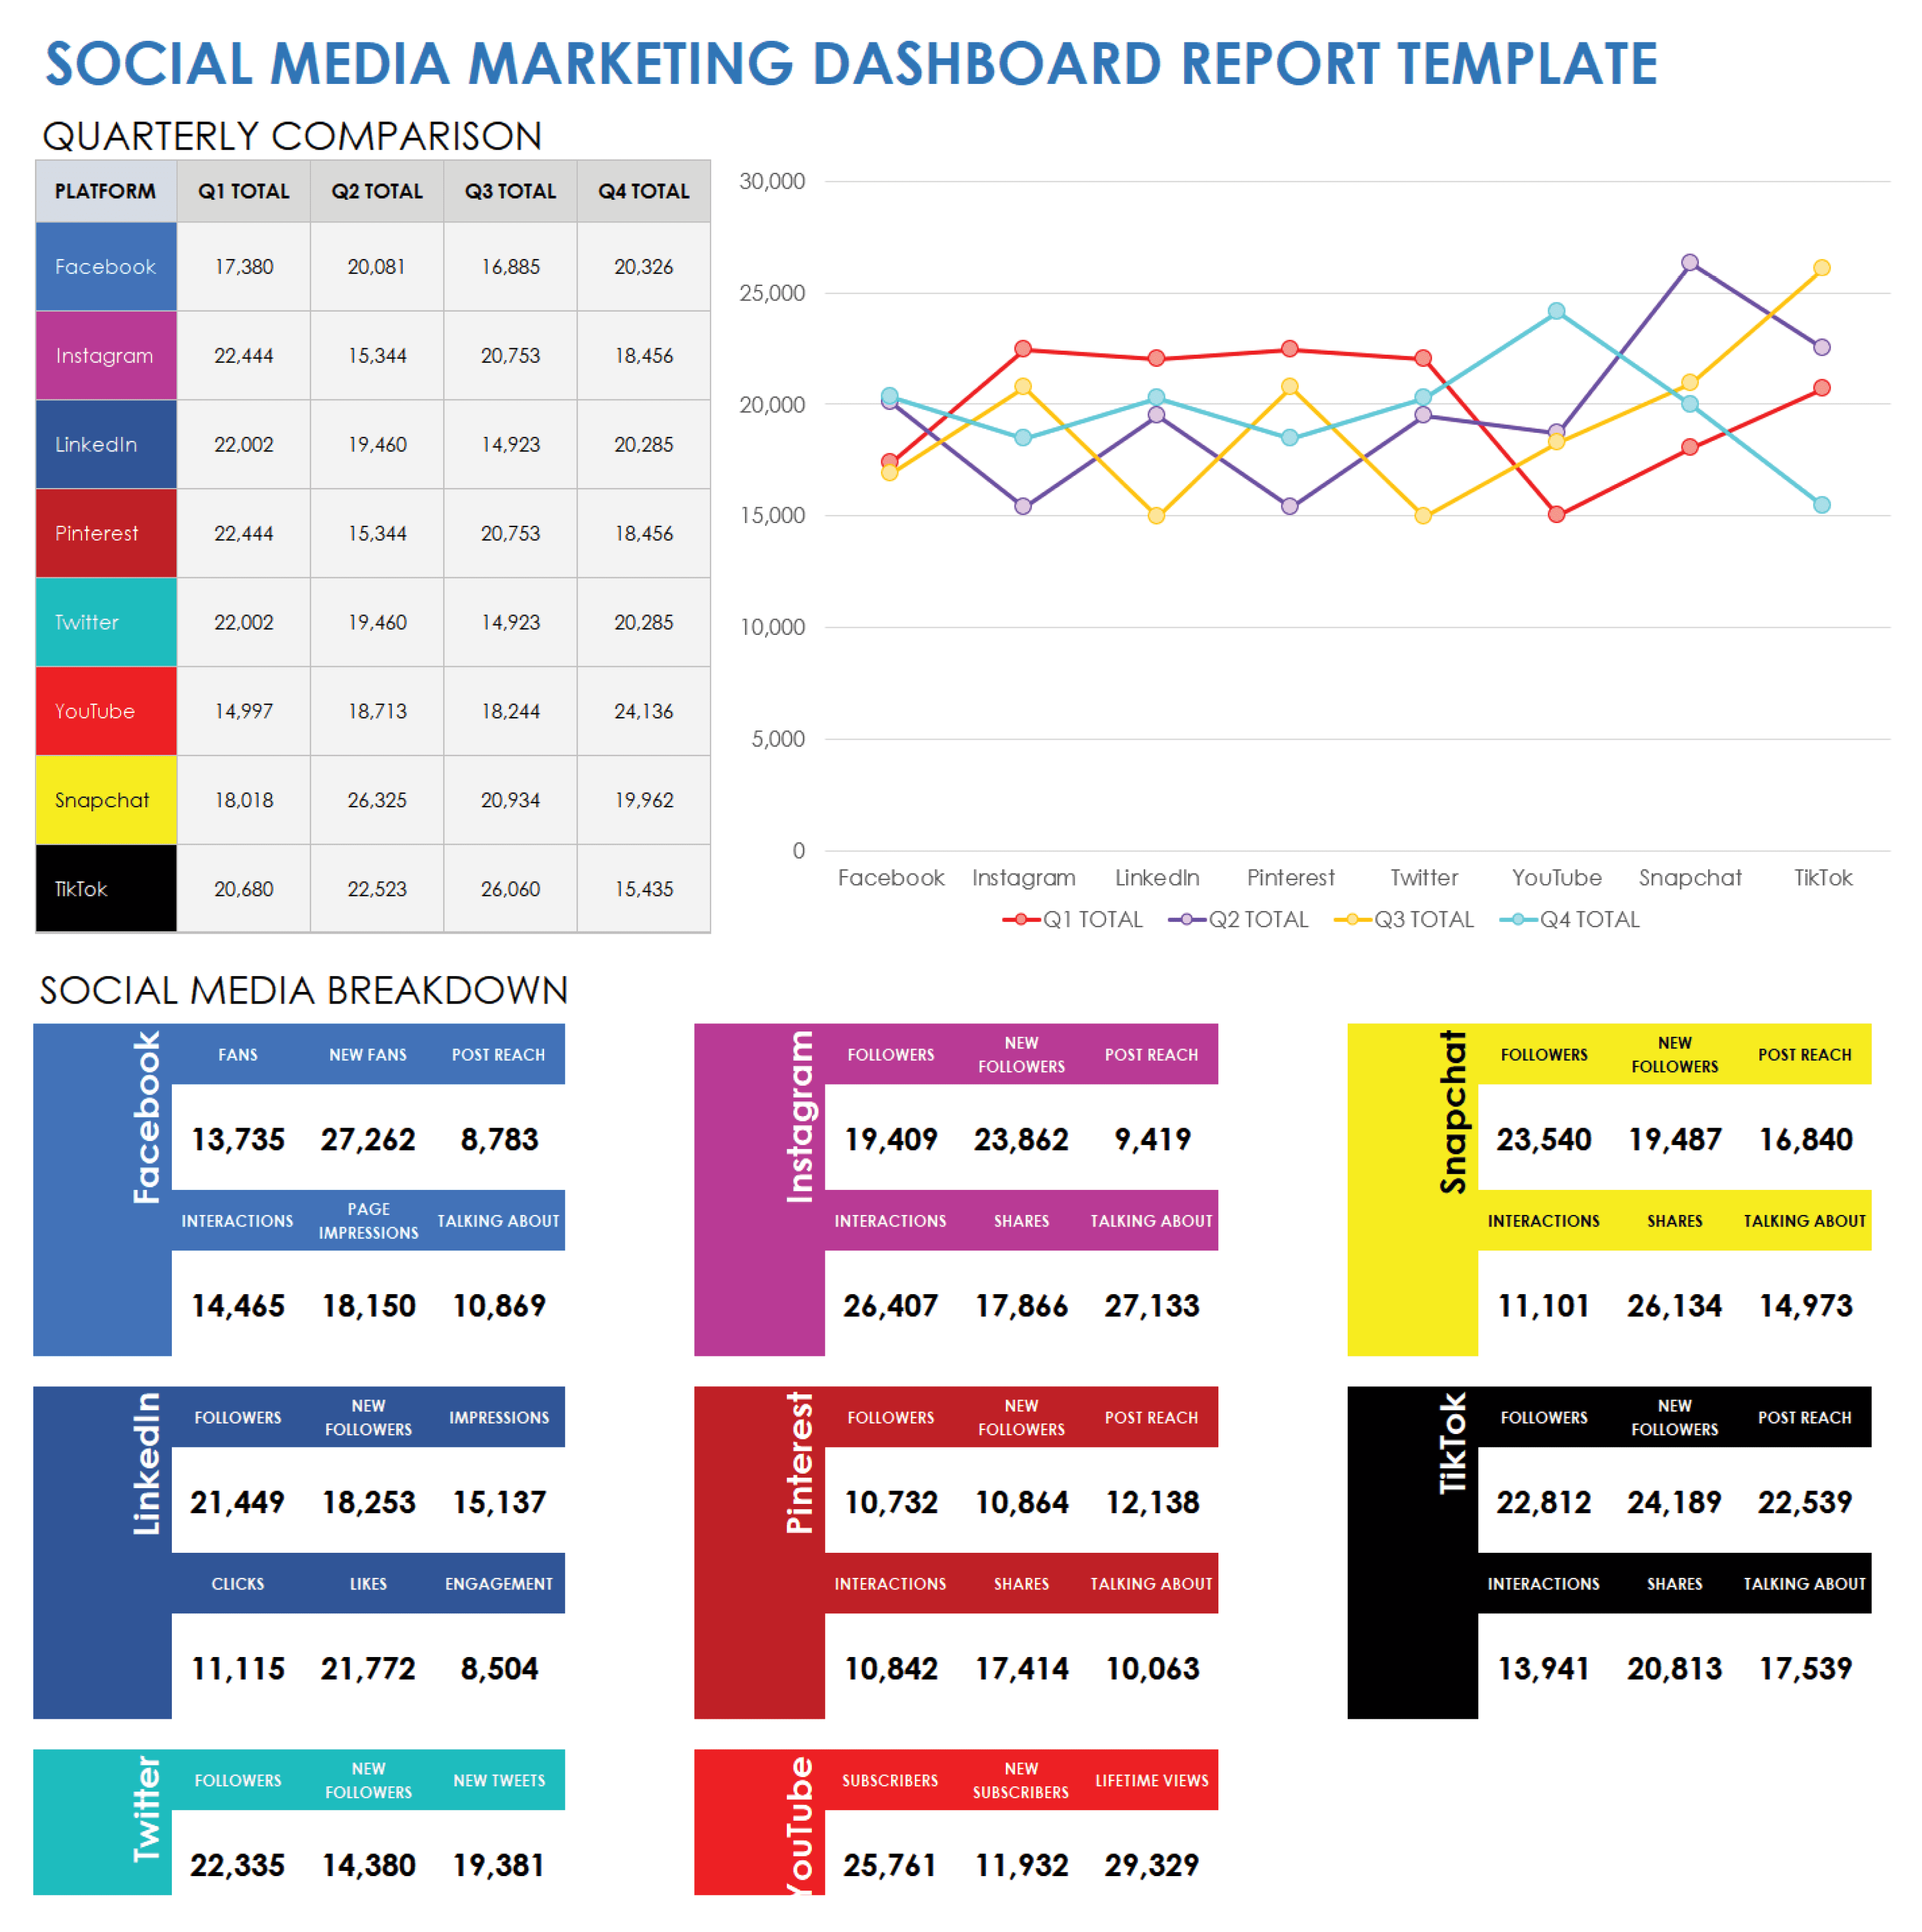 Social Media Marketing Dashboard Report Template